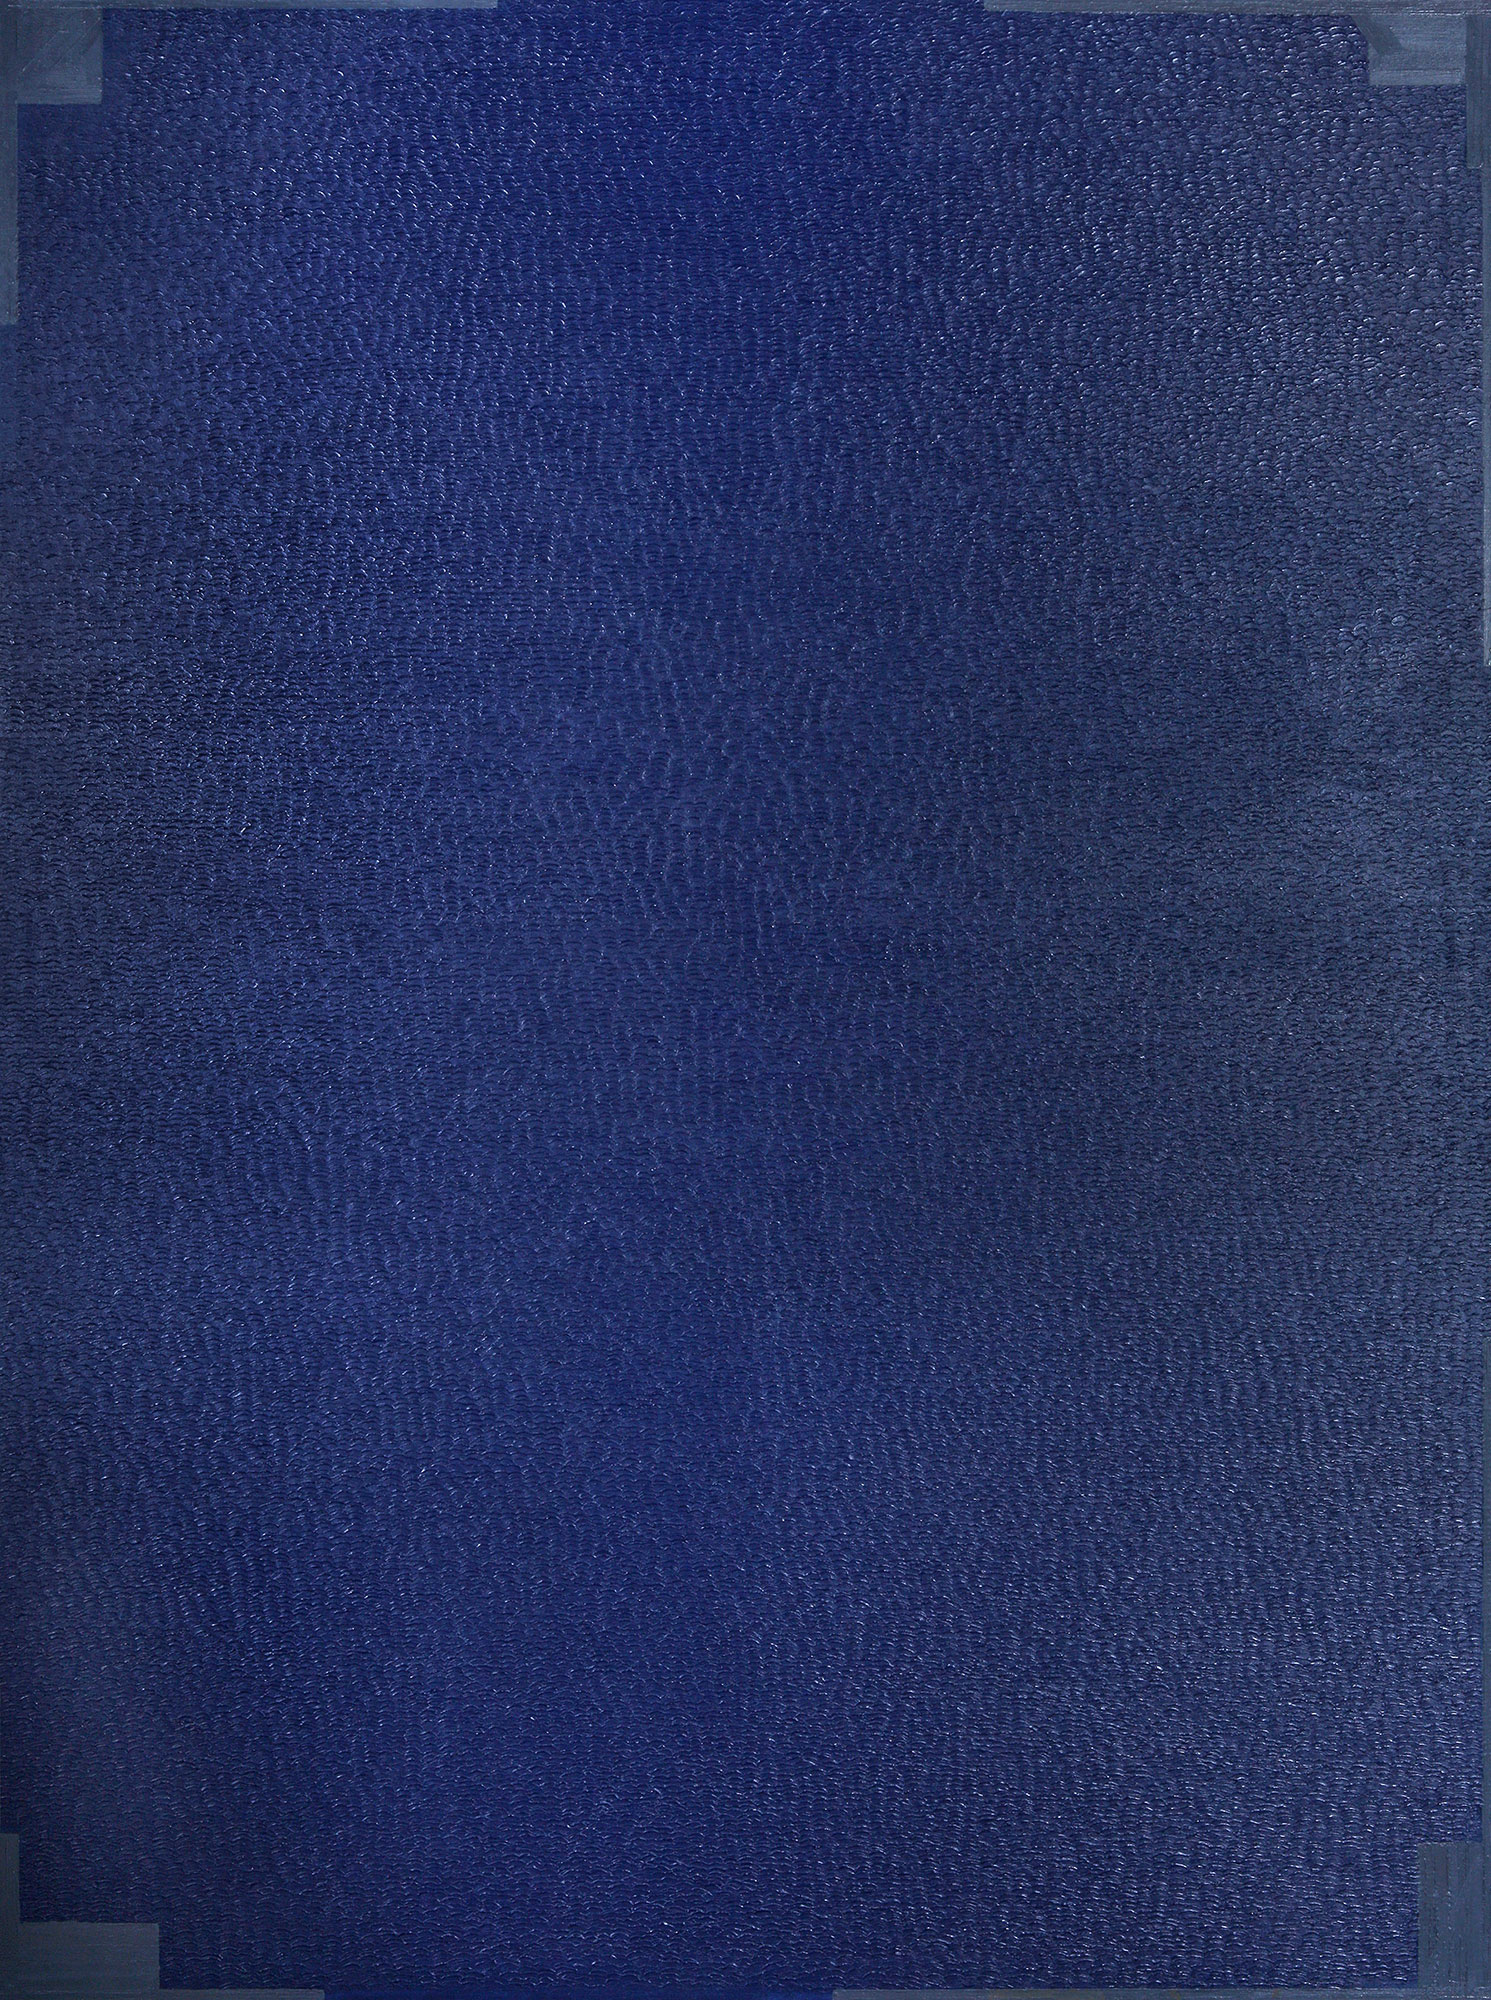 Kenneth Dingwall, Small Corner, 1979, acrylic on canvas, 214cm x 160cm